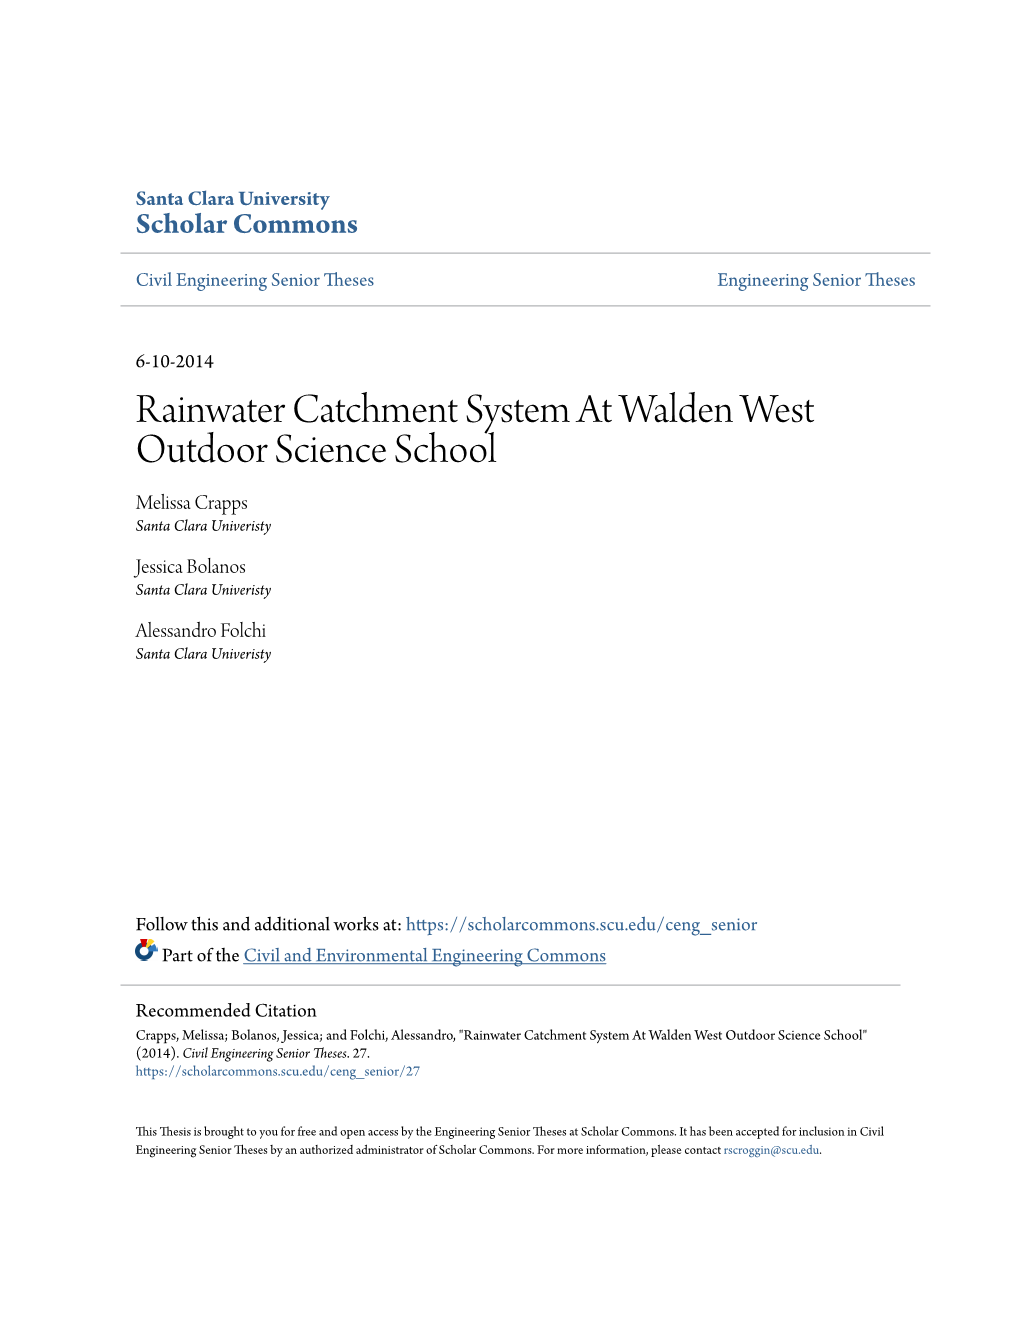 Rainwater Catchment System at Walden West Outdoor Science School Melissa Crapps Santa Clara Univeristy